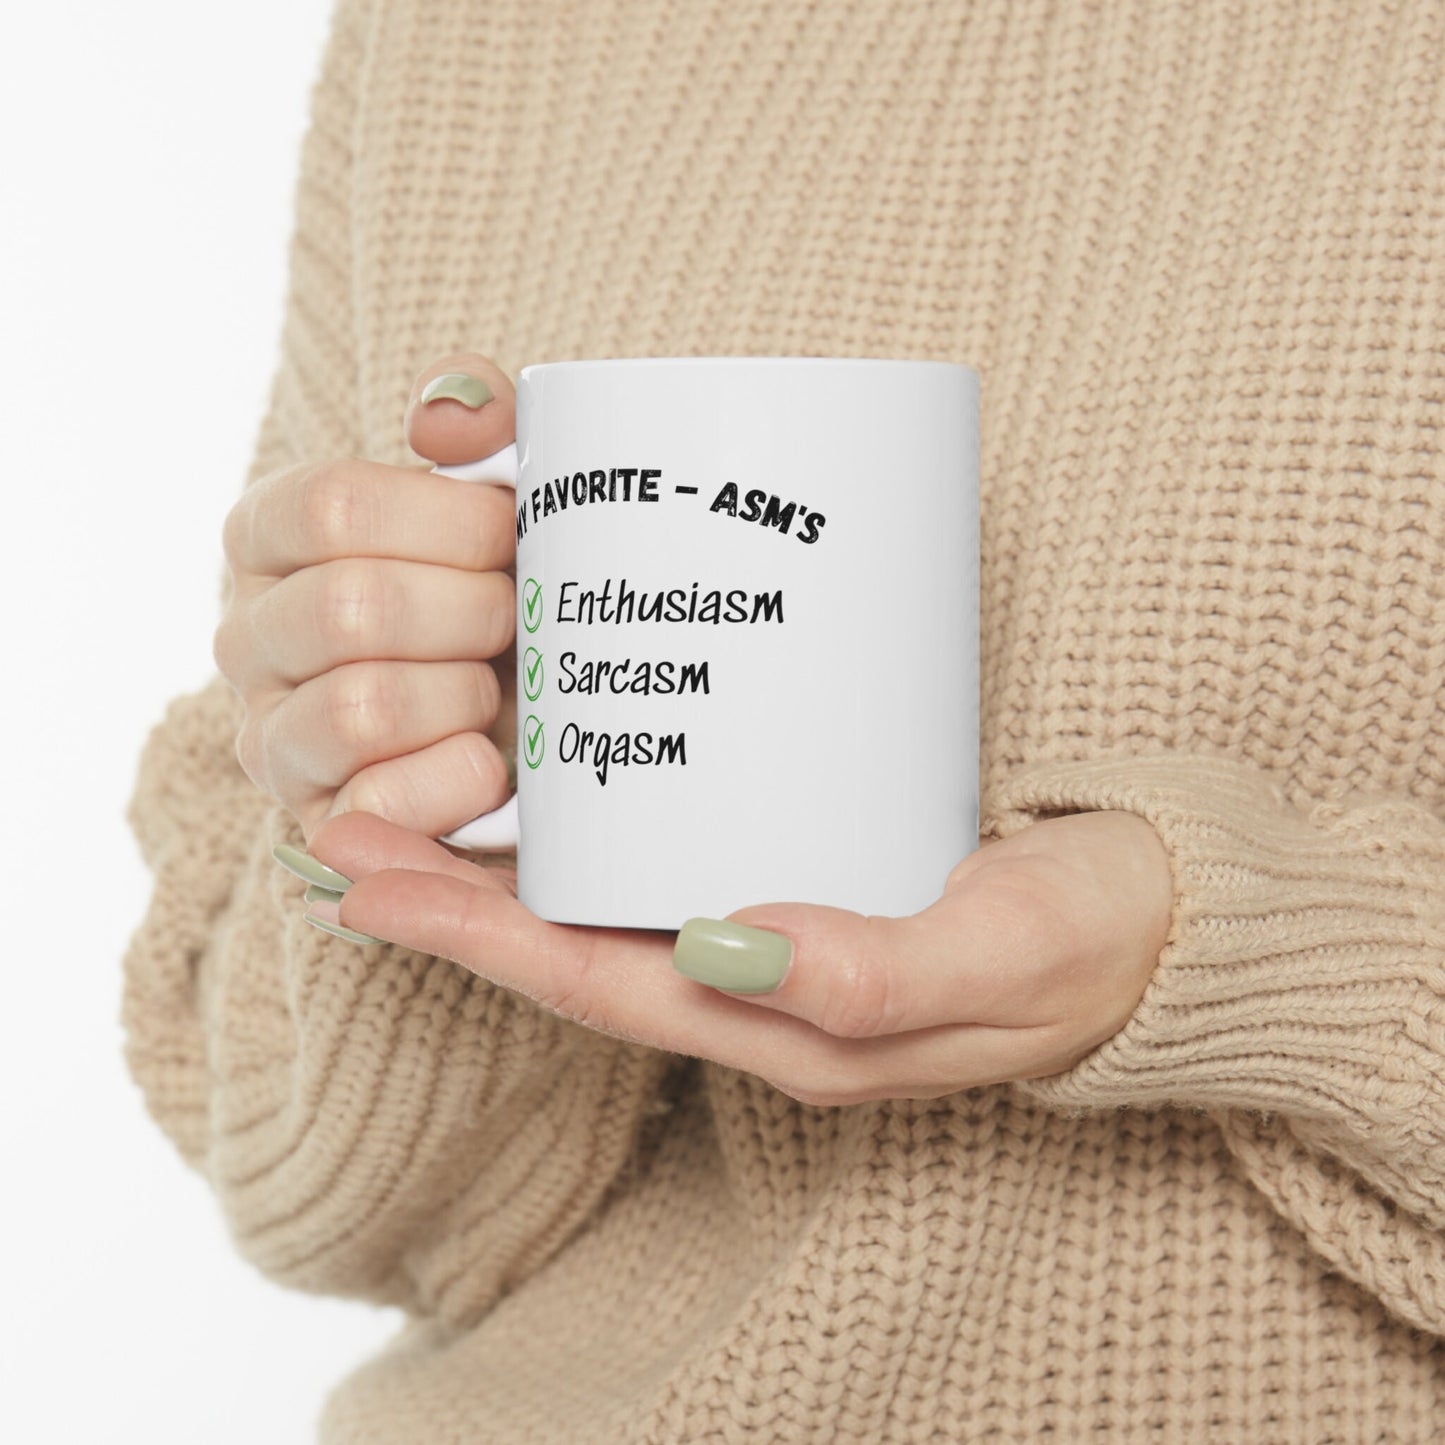 Favorite Asms enthusiasm sarcasm orgasm coffee mug.  Enthusiasm sarcasm orgasm coffee mug, word ending asm orgasm mug,  Unique sarcasm mug